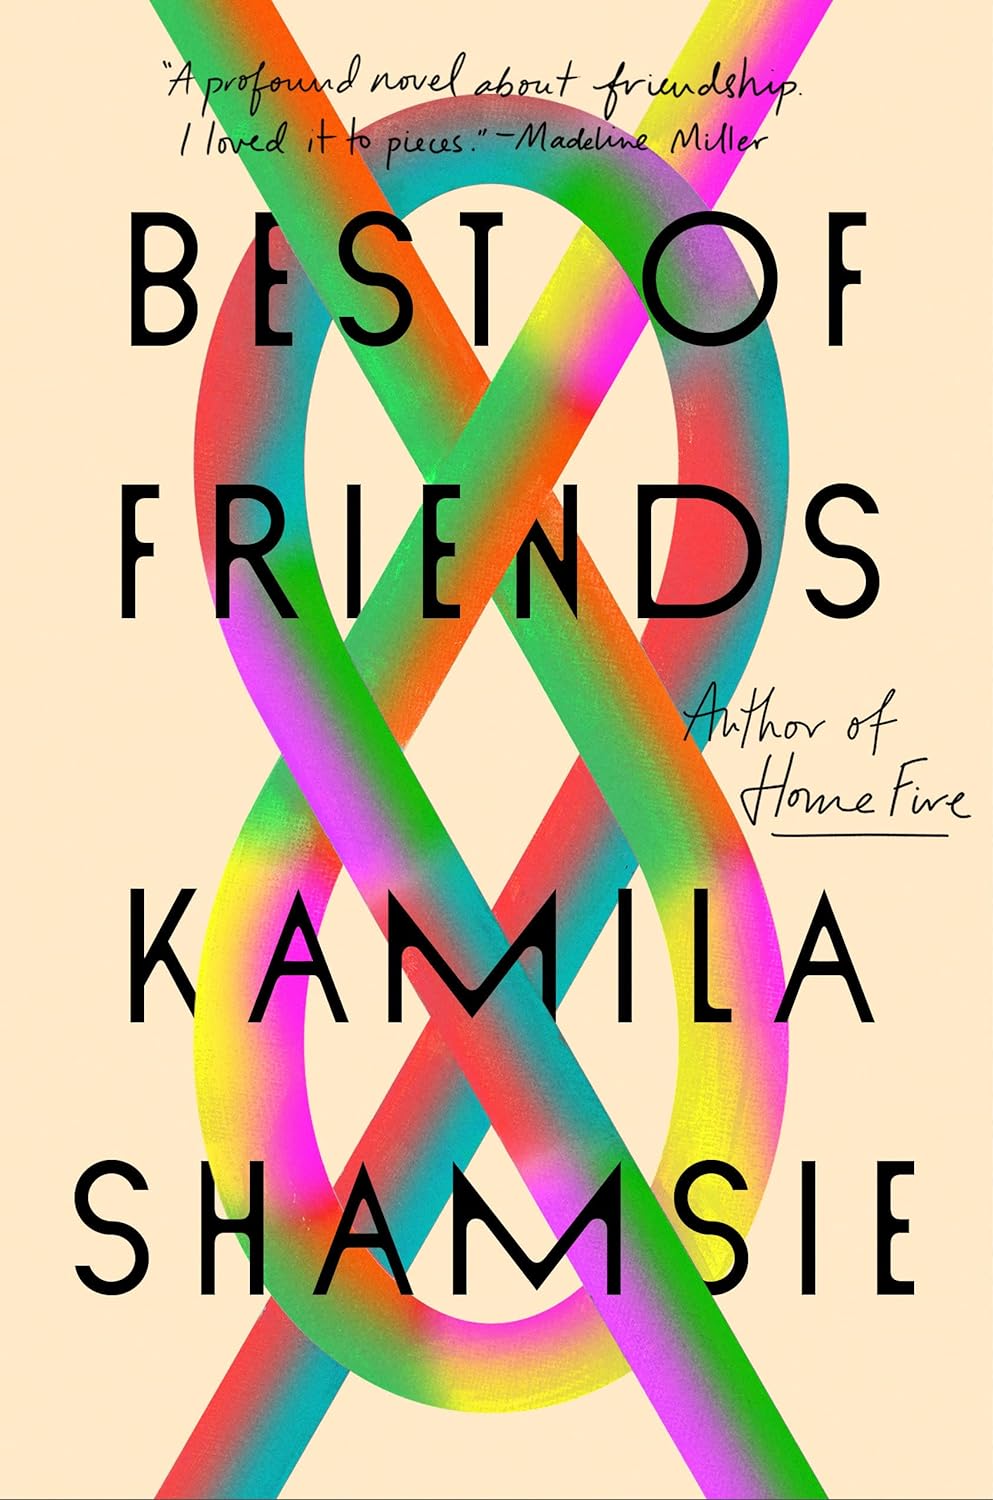 Best of Friends - Kamila Shamsie